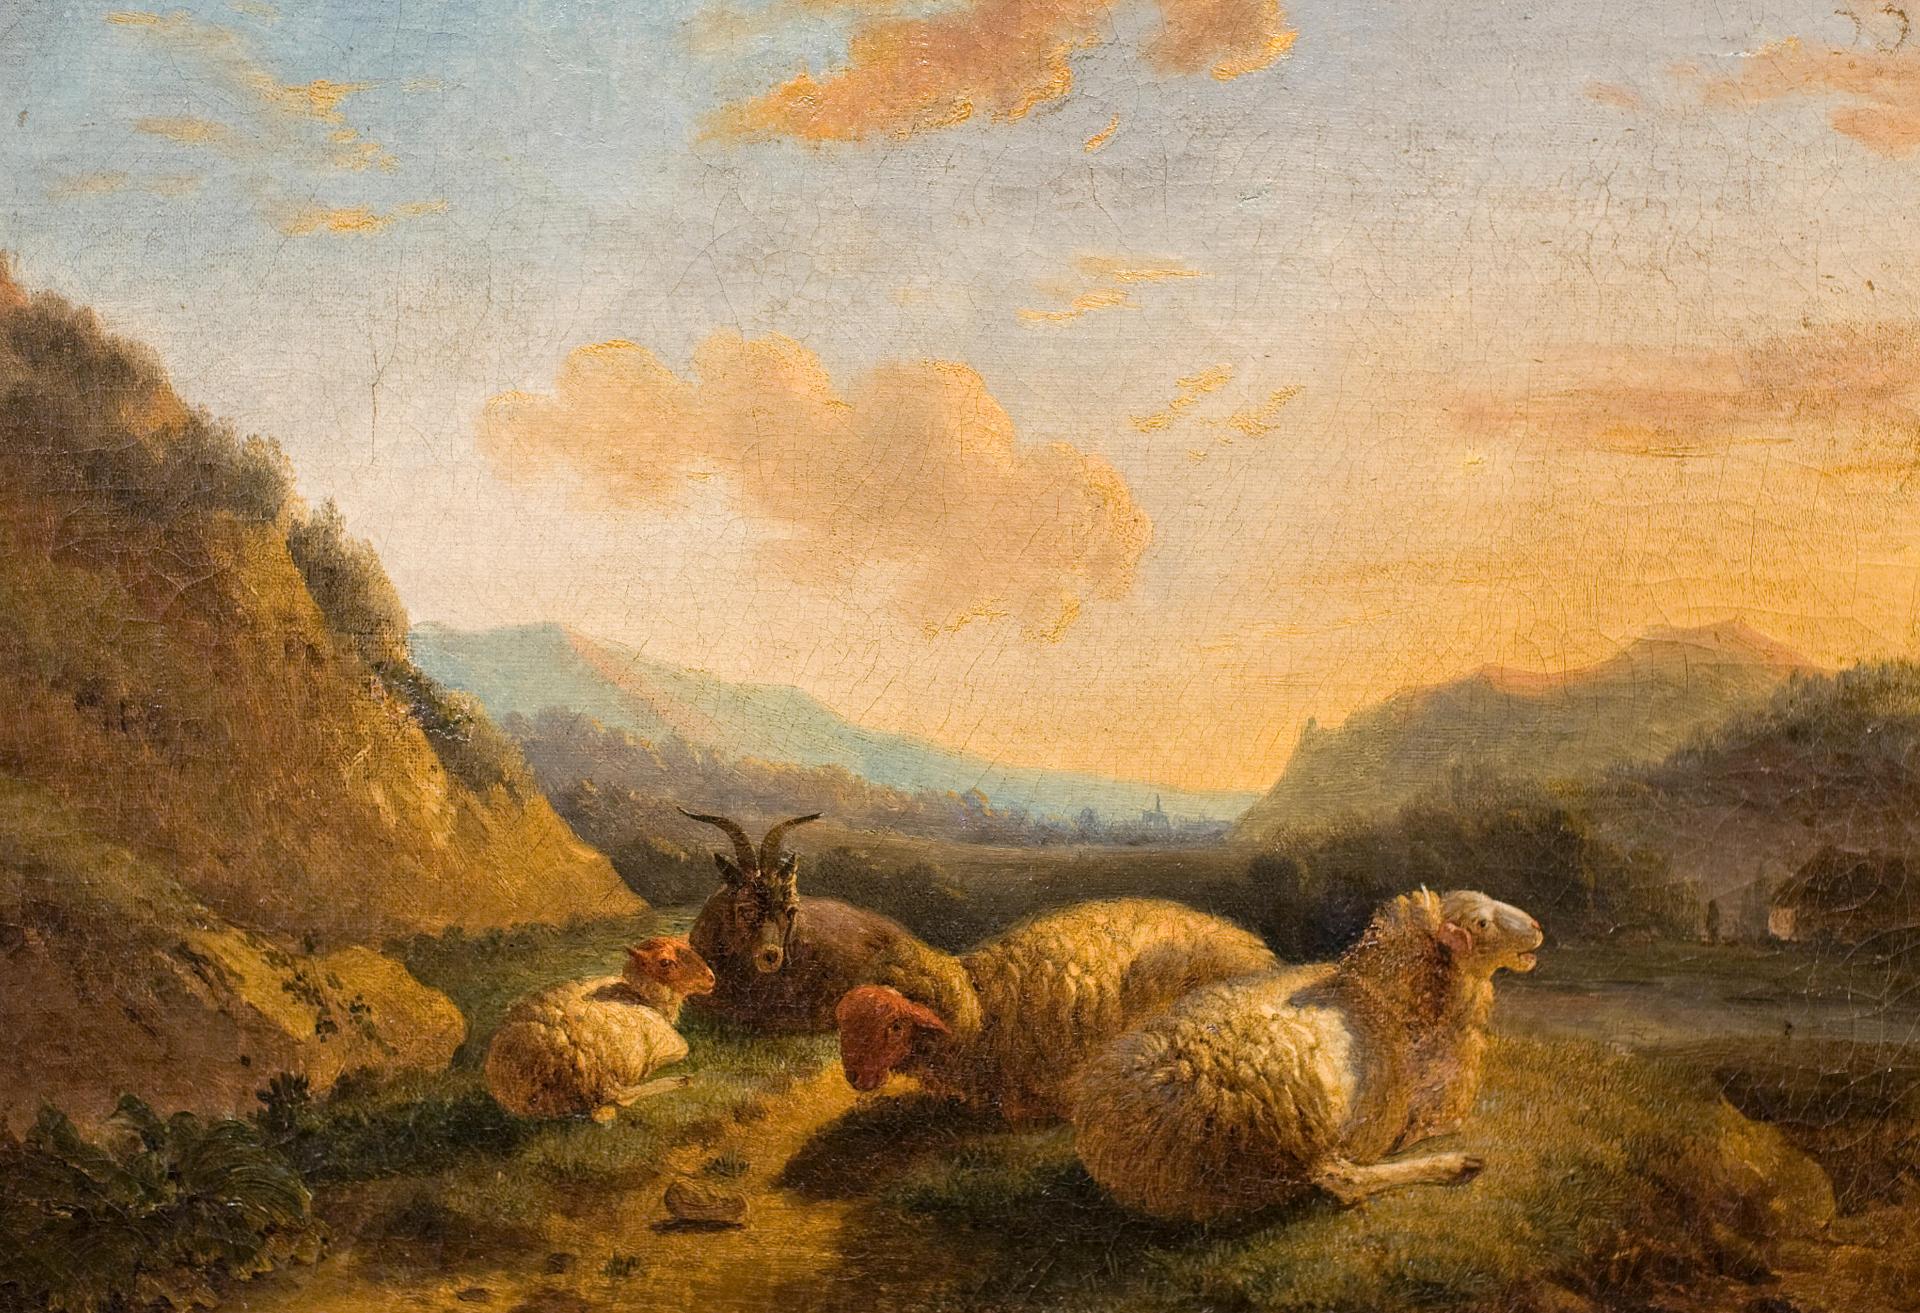 Eugène Verboeckhoven (1798-1881) - Sheep and goats in a landscape